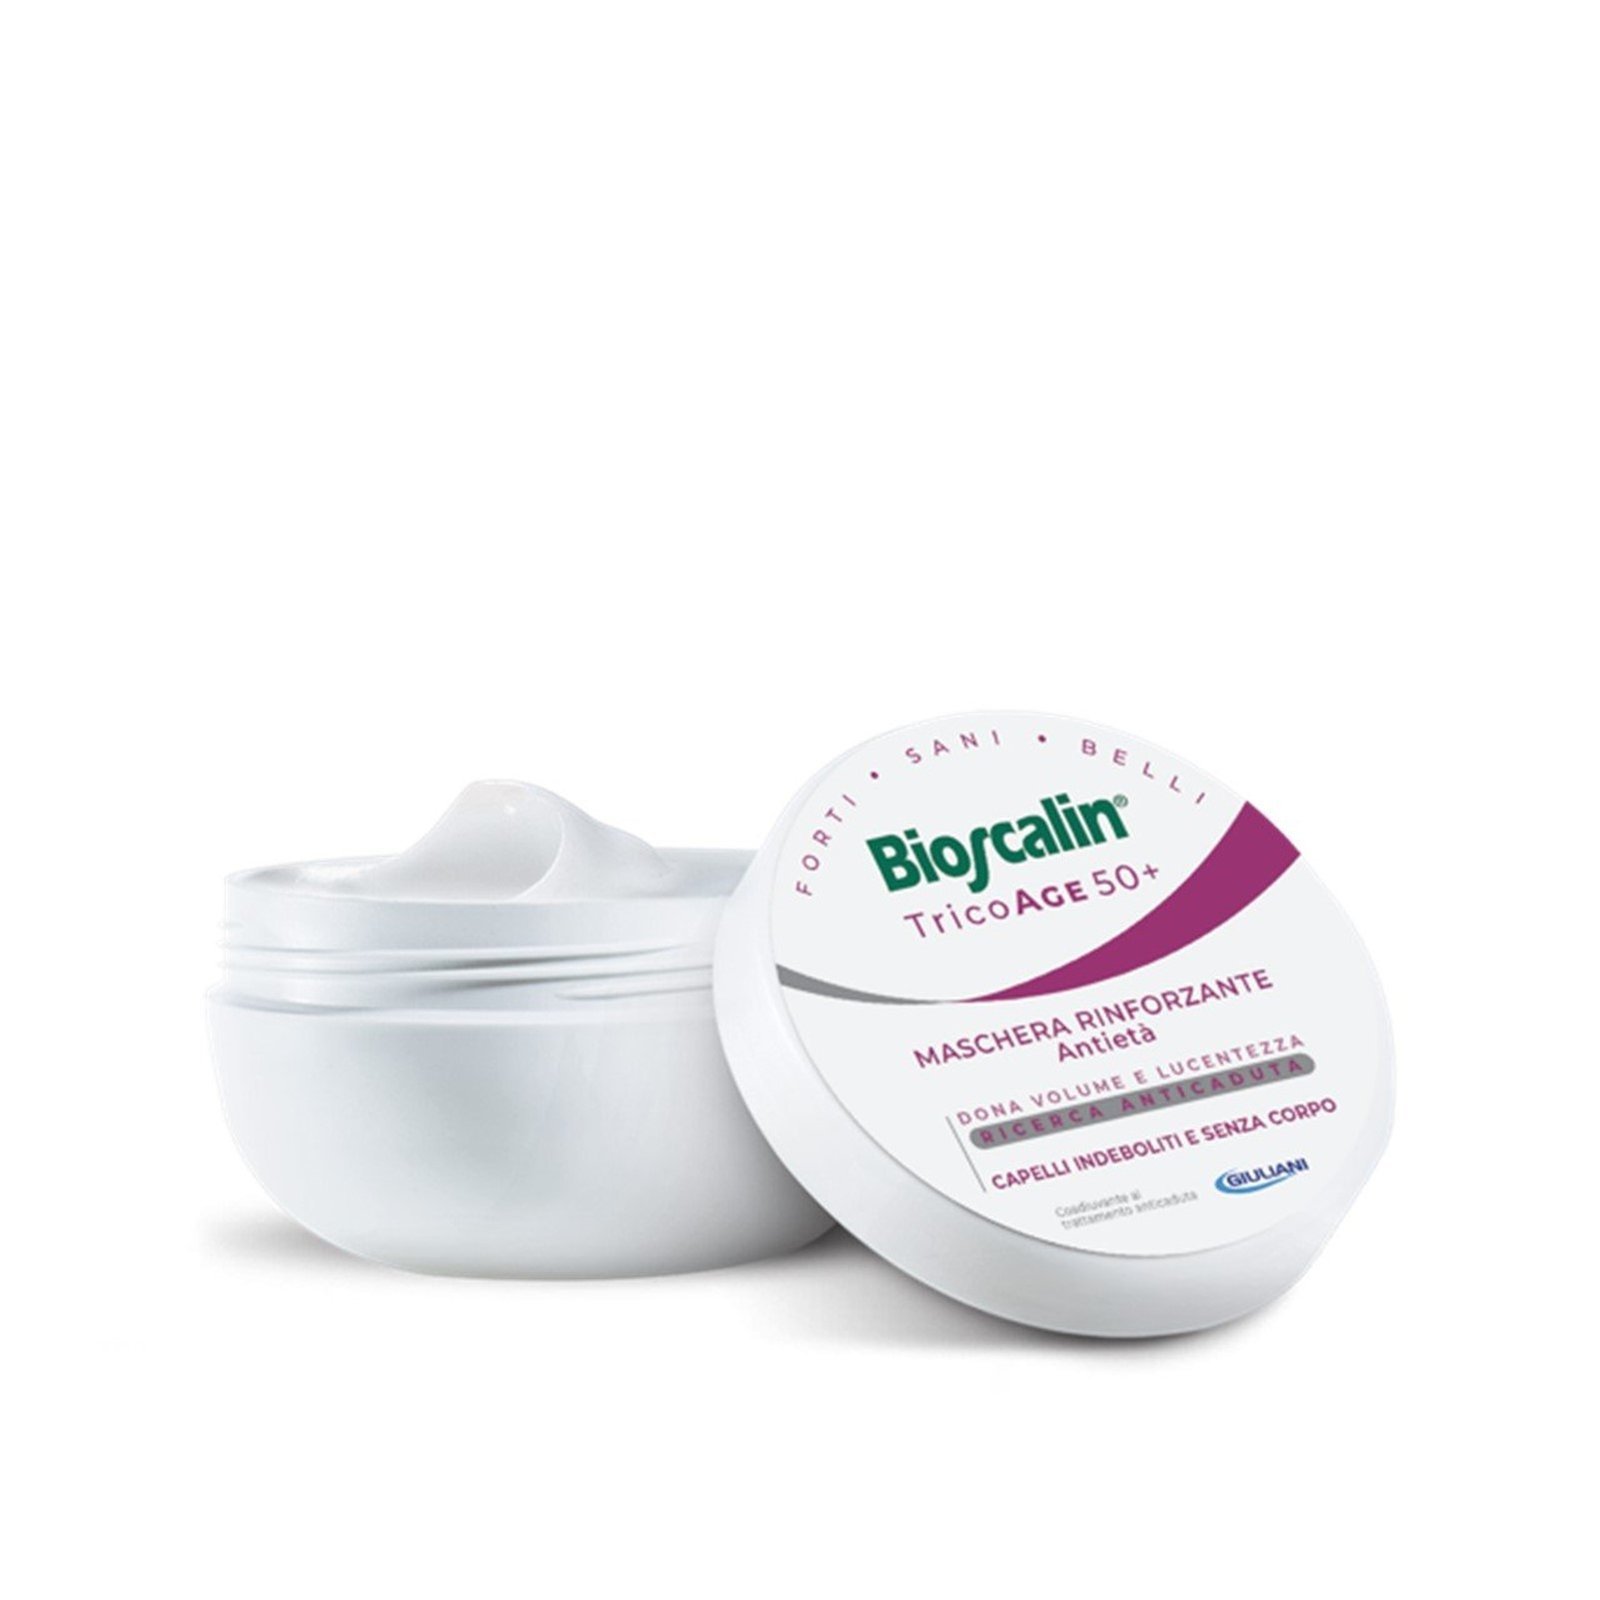 Bioscalin TricoAge 50+ Anti-Aging Fortifying Mask 200ml (6.76 fl oz)